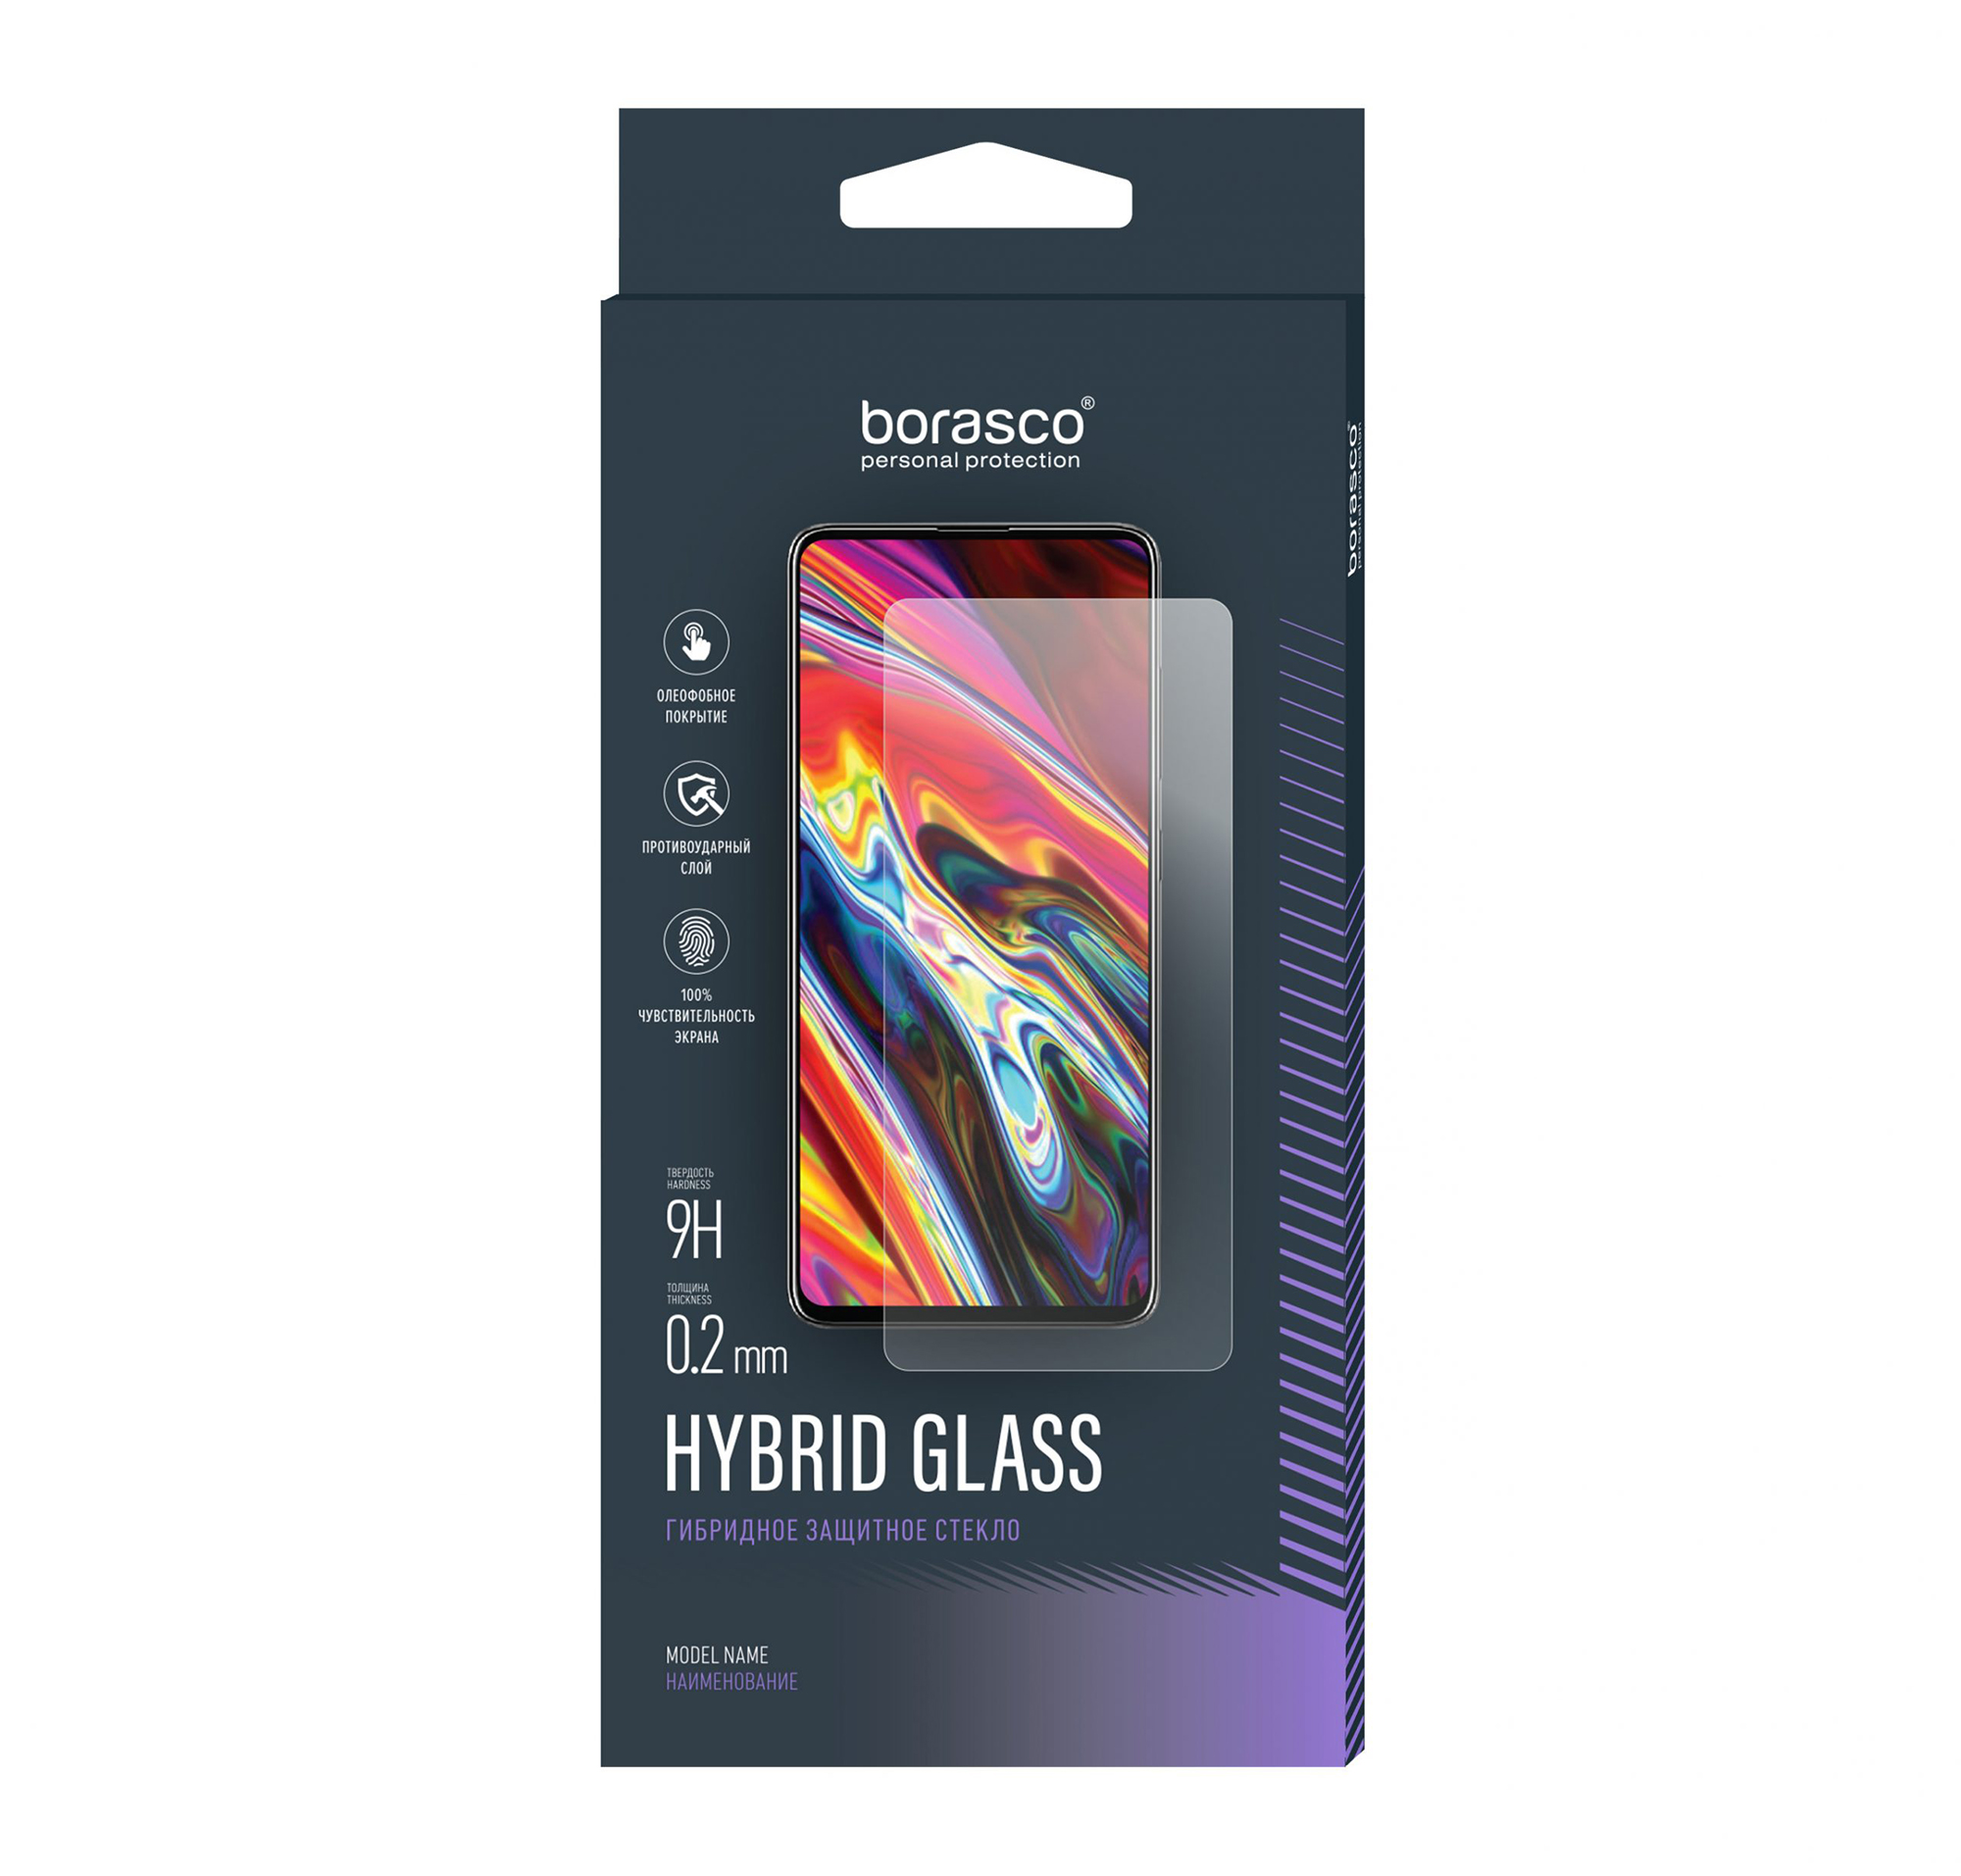 Защитное стекло Hybrid Glass для MOTOROLA G7 Plus 64Gb